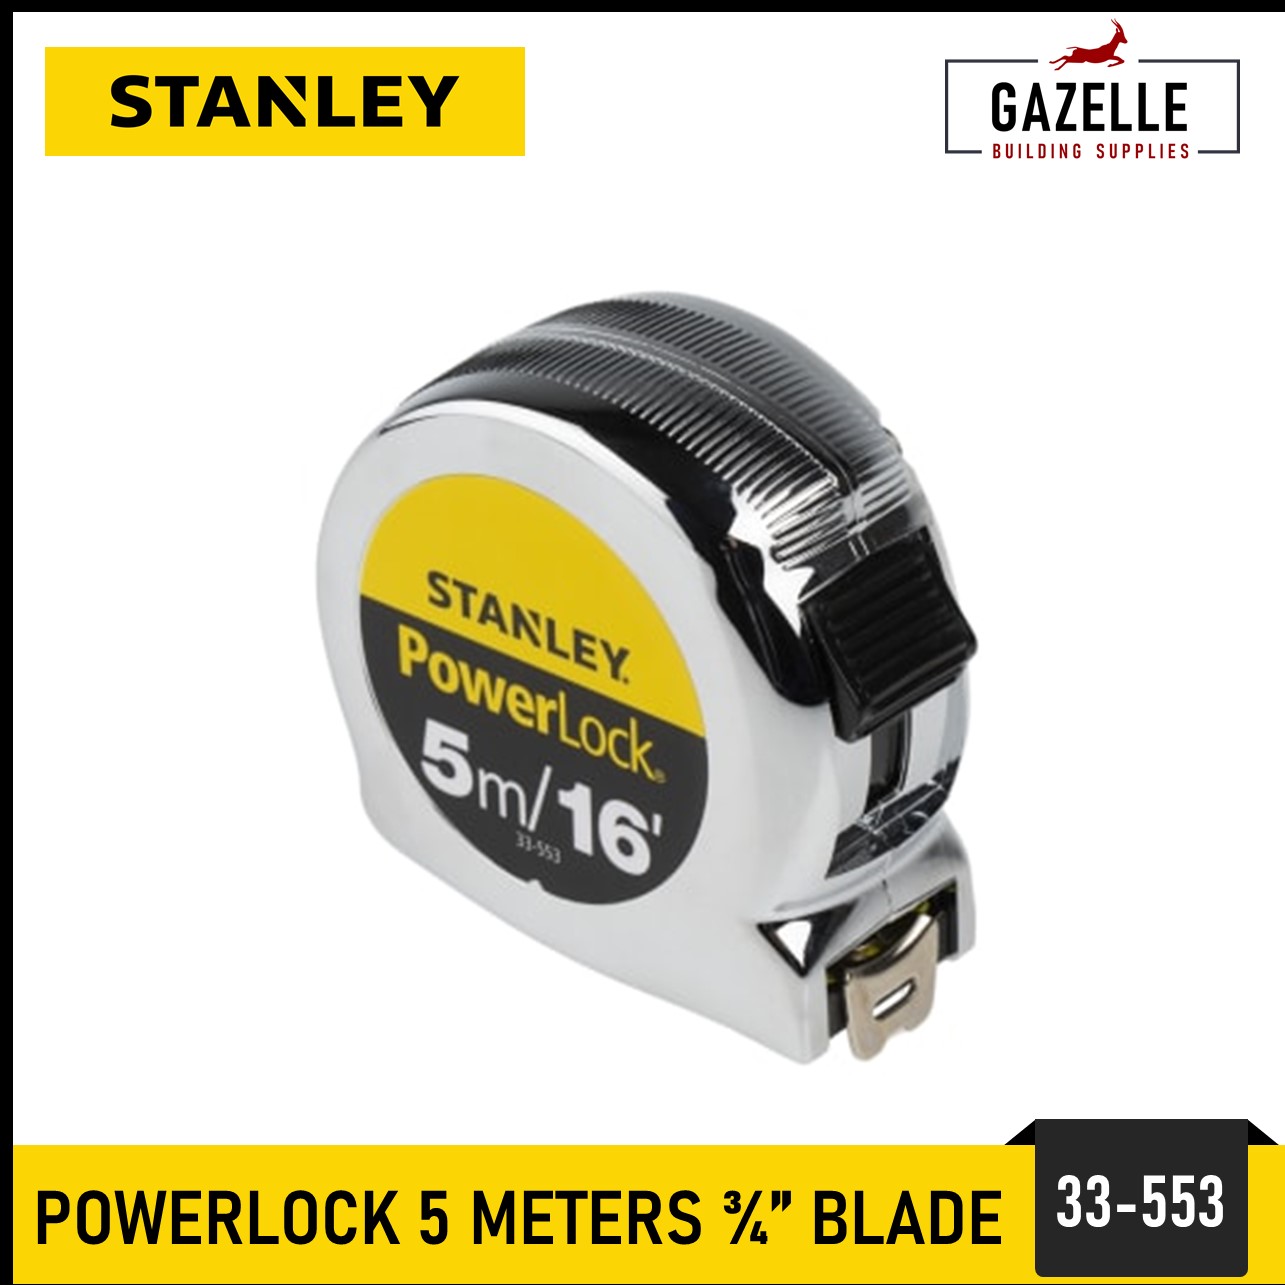 Stanley 39-130 3pk Powerlock Keychain Tape, Women's, Size: One Size